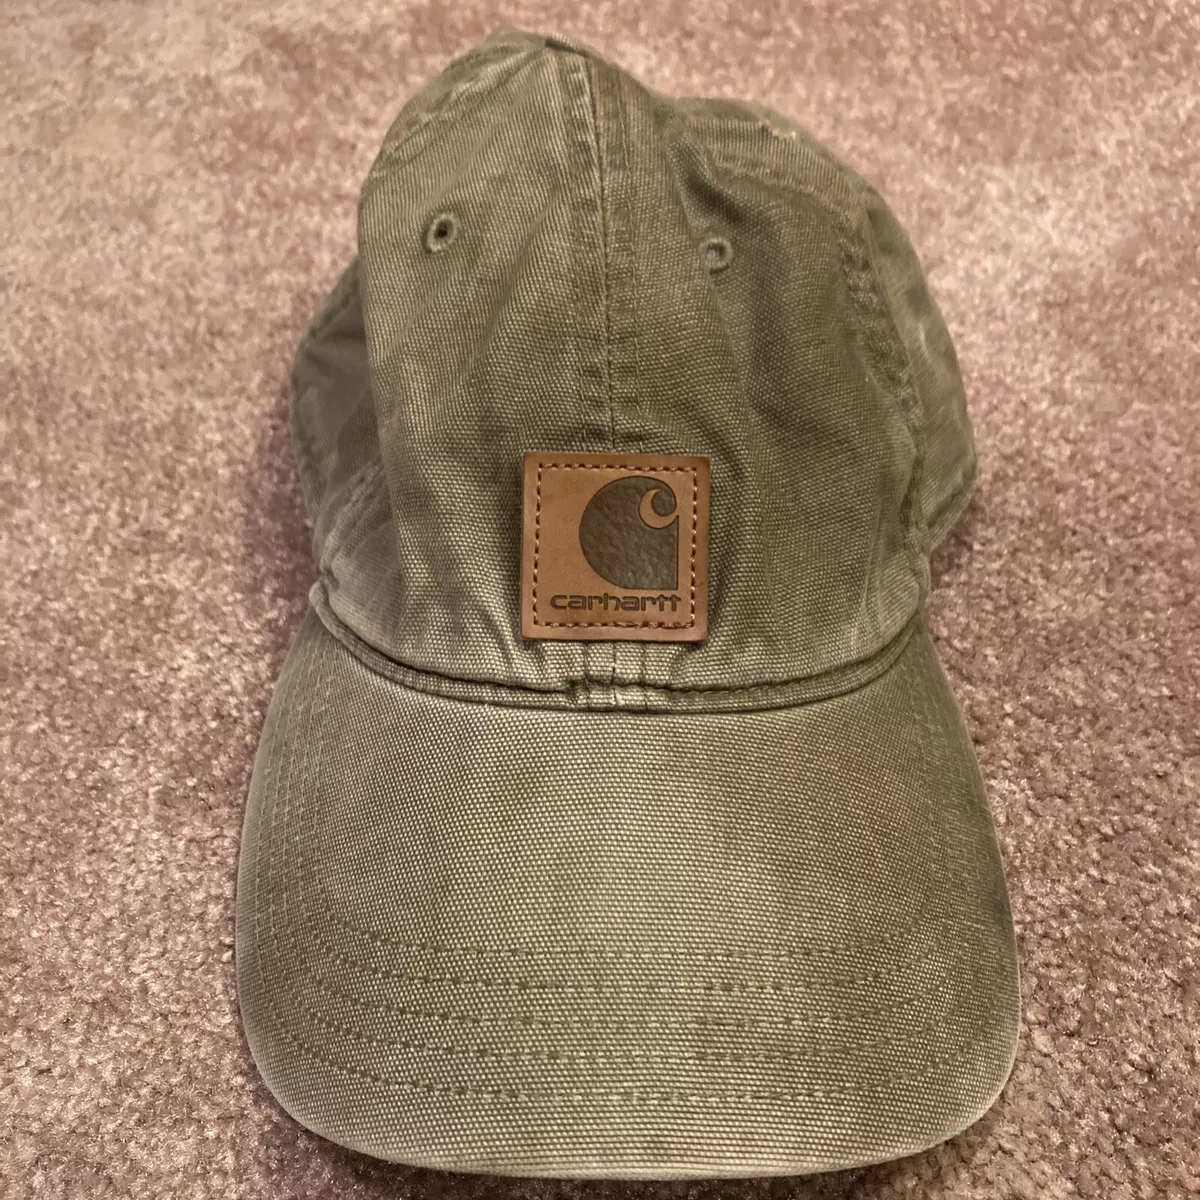 buiten gebruik eenvoudig gehandicapt Carhartt Hat Cap RN# 14806 A146 Tan Fitted Cotton Classic Size L/XL | eBay